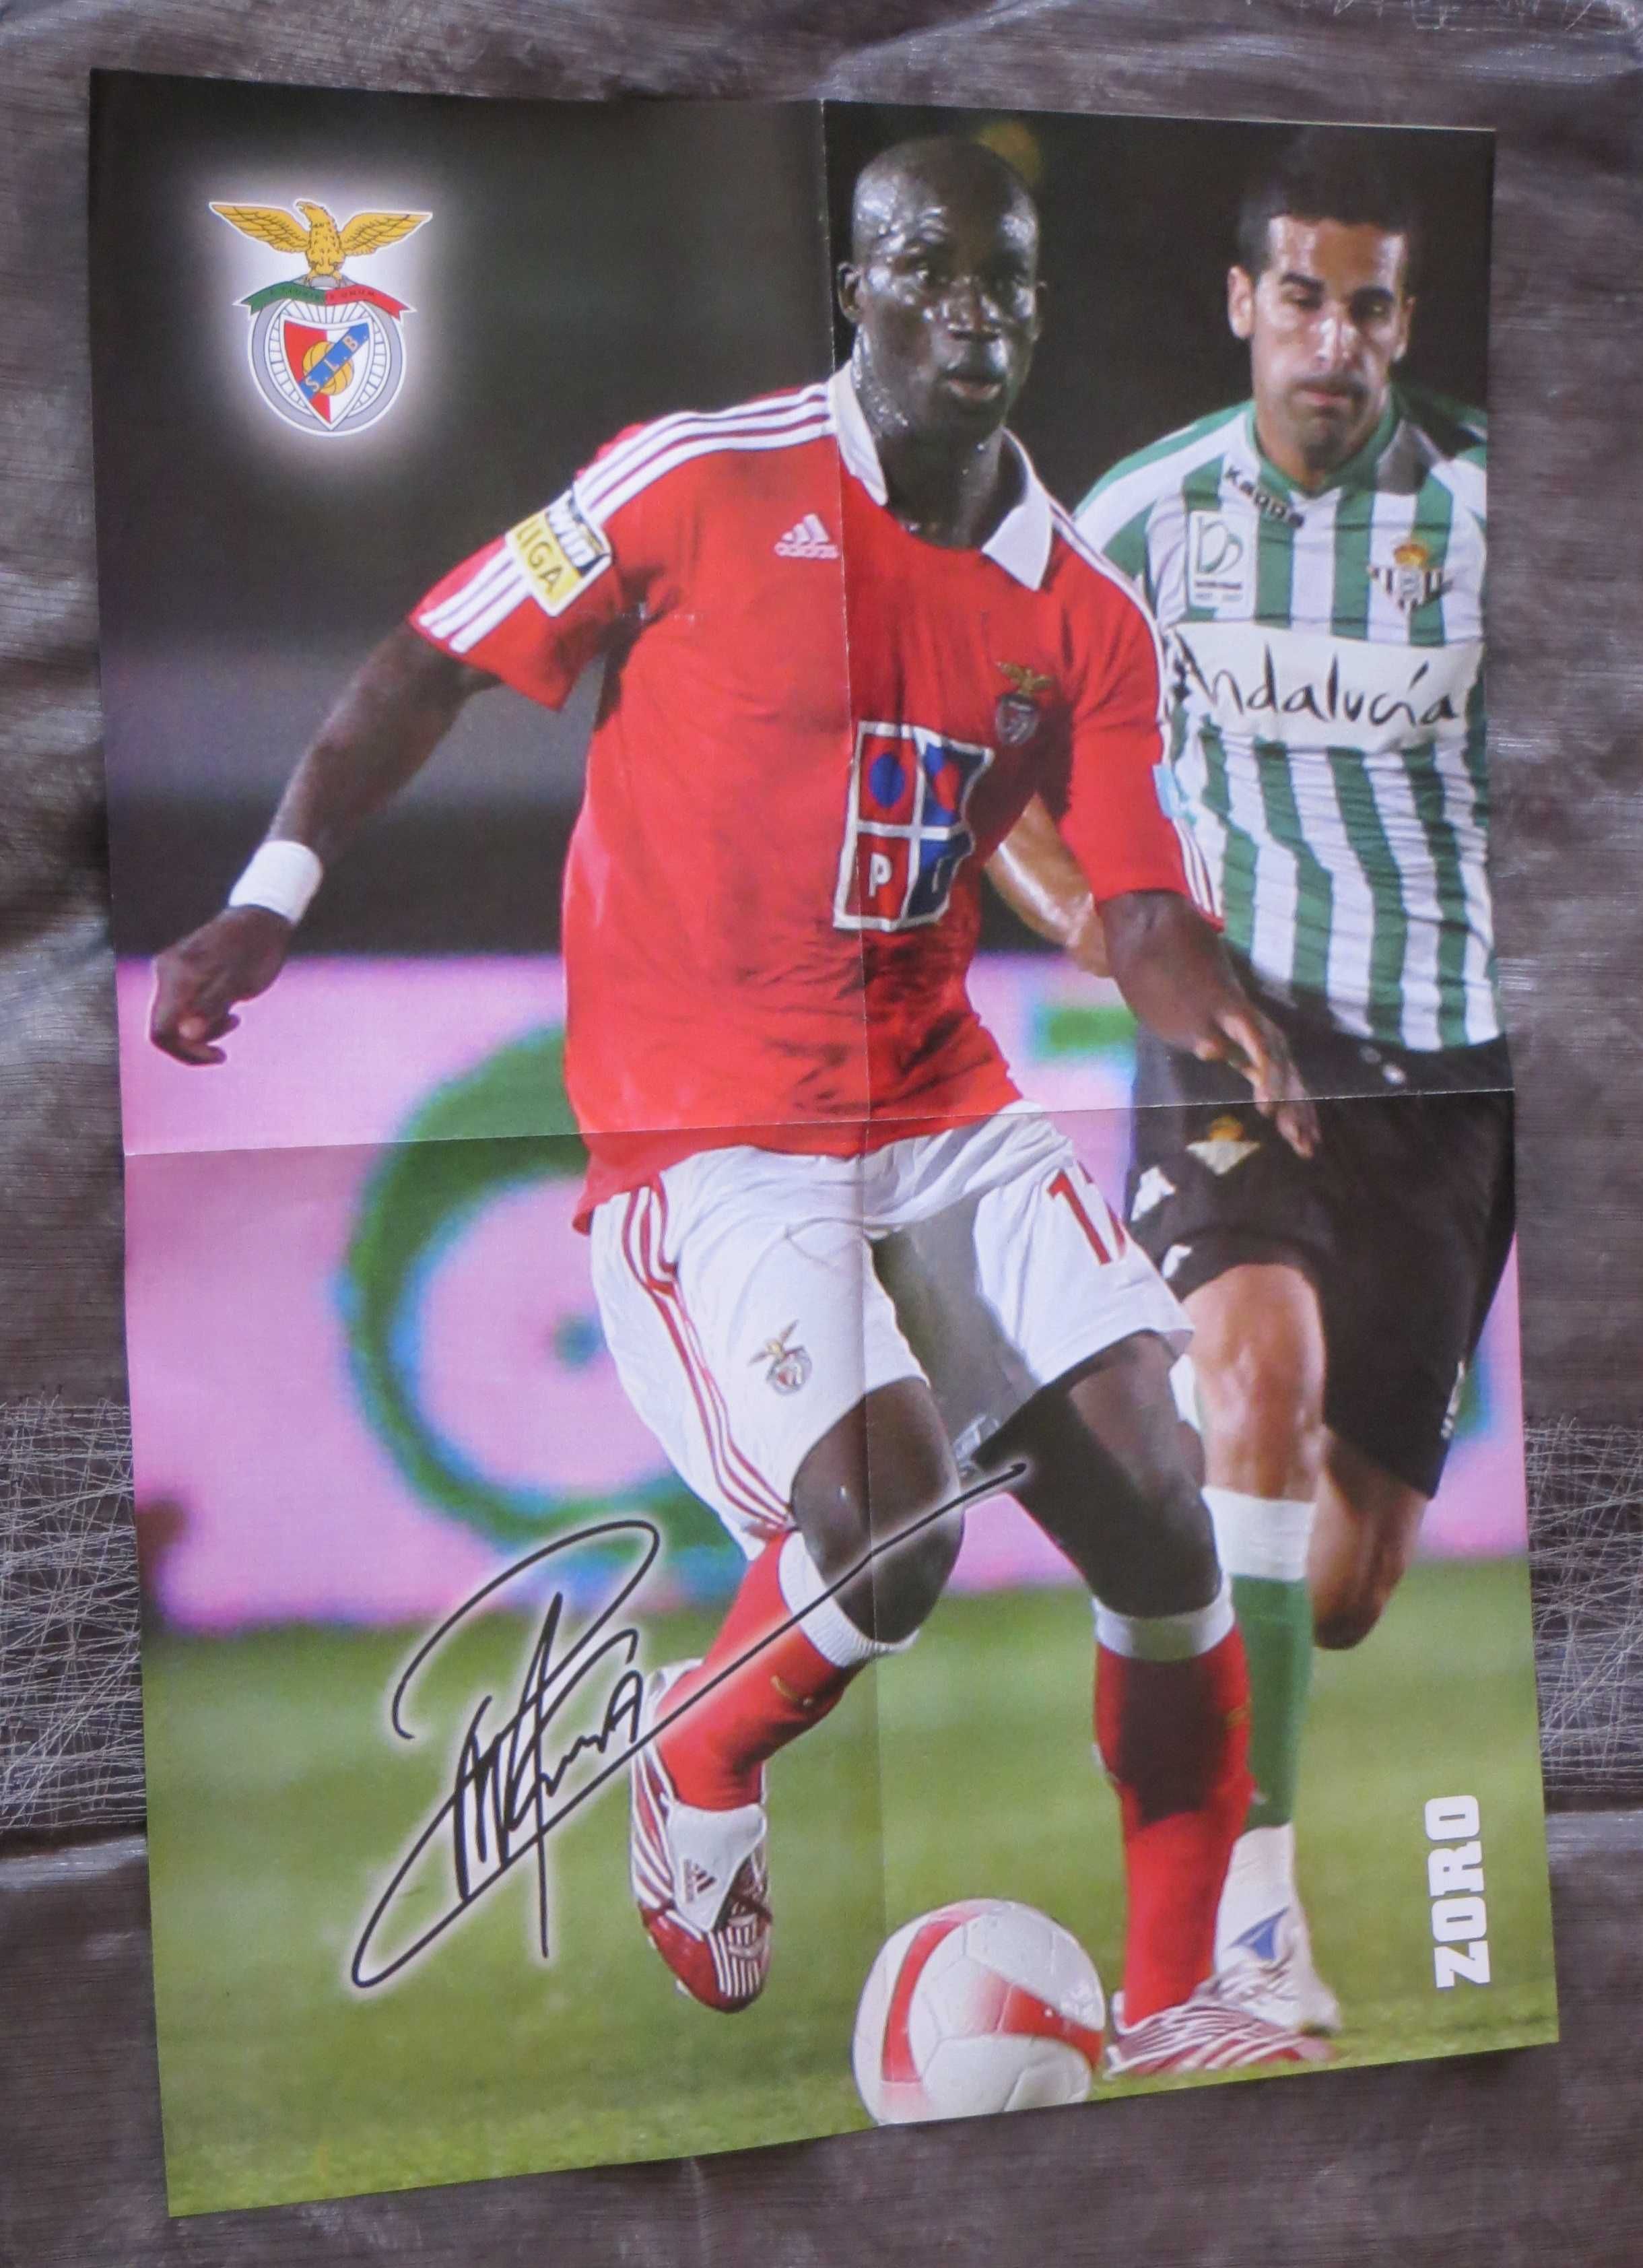 Posters Benfica com 2 jogadores cada poster - Medida : 58 X 43 cm